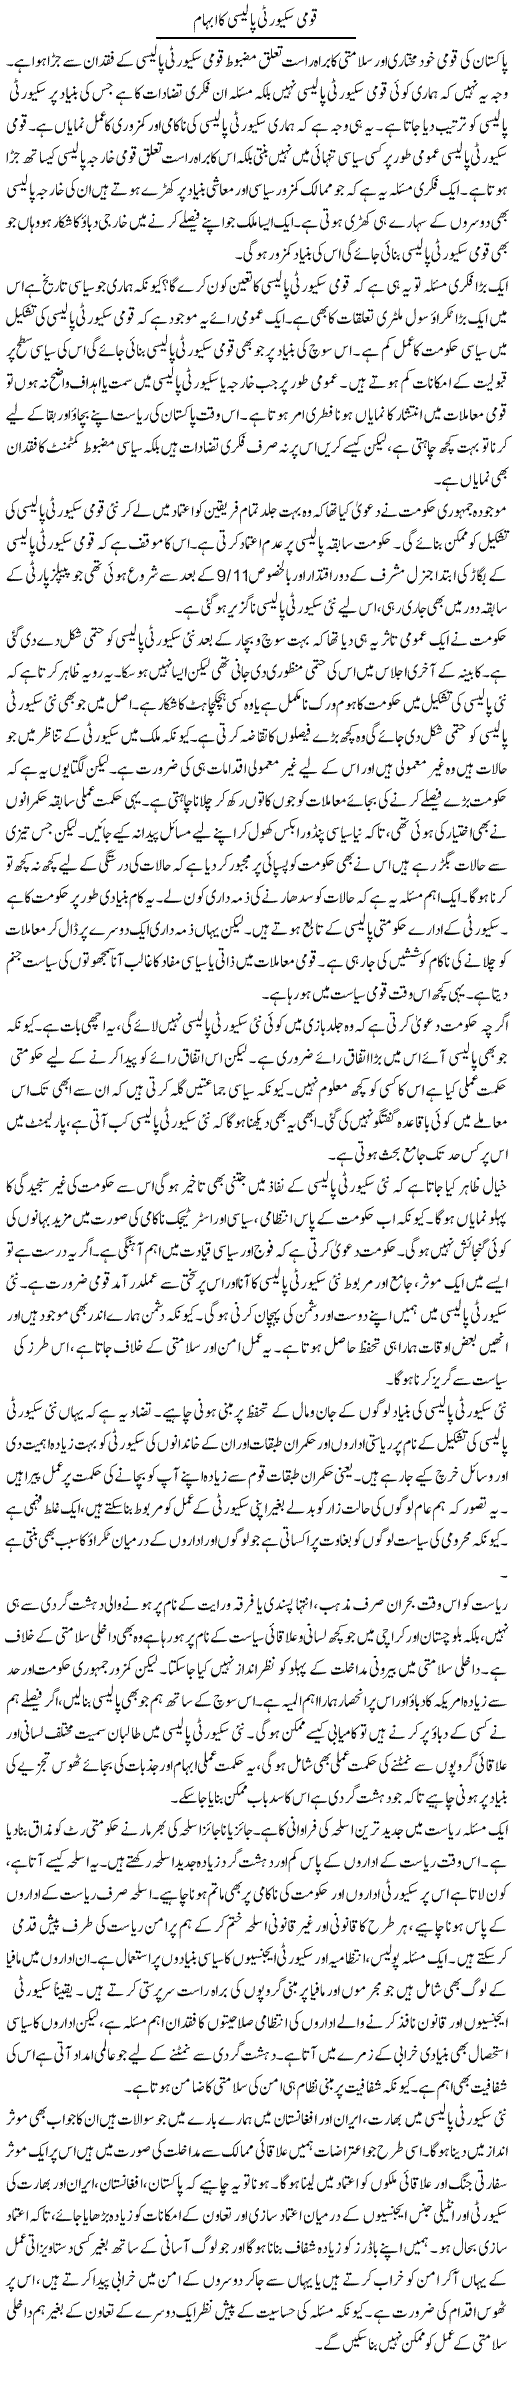 Qomi Security Policy Ka Ibham | Salman Abid | Daily Urdu Columns